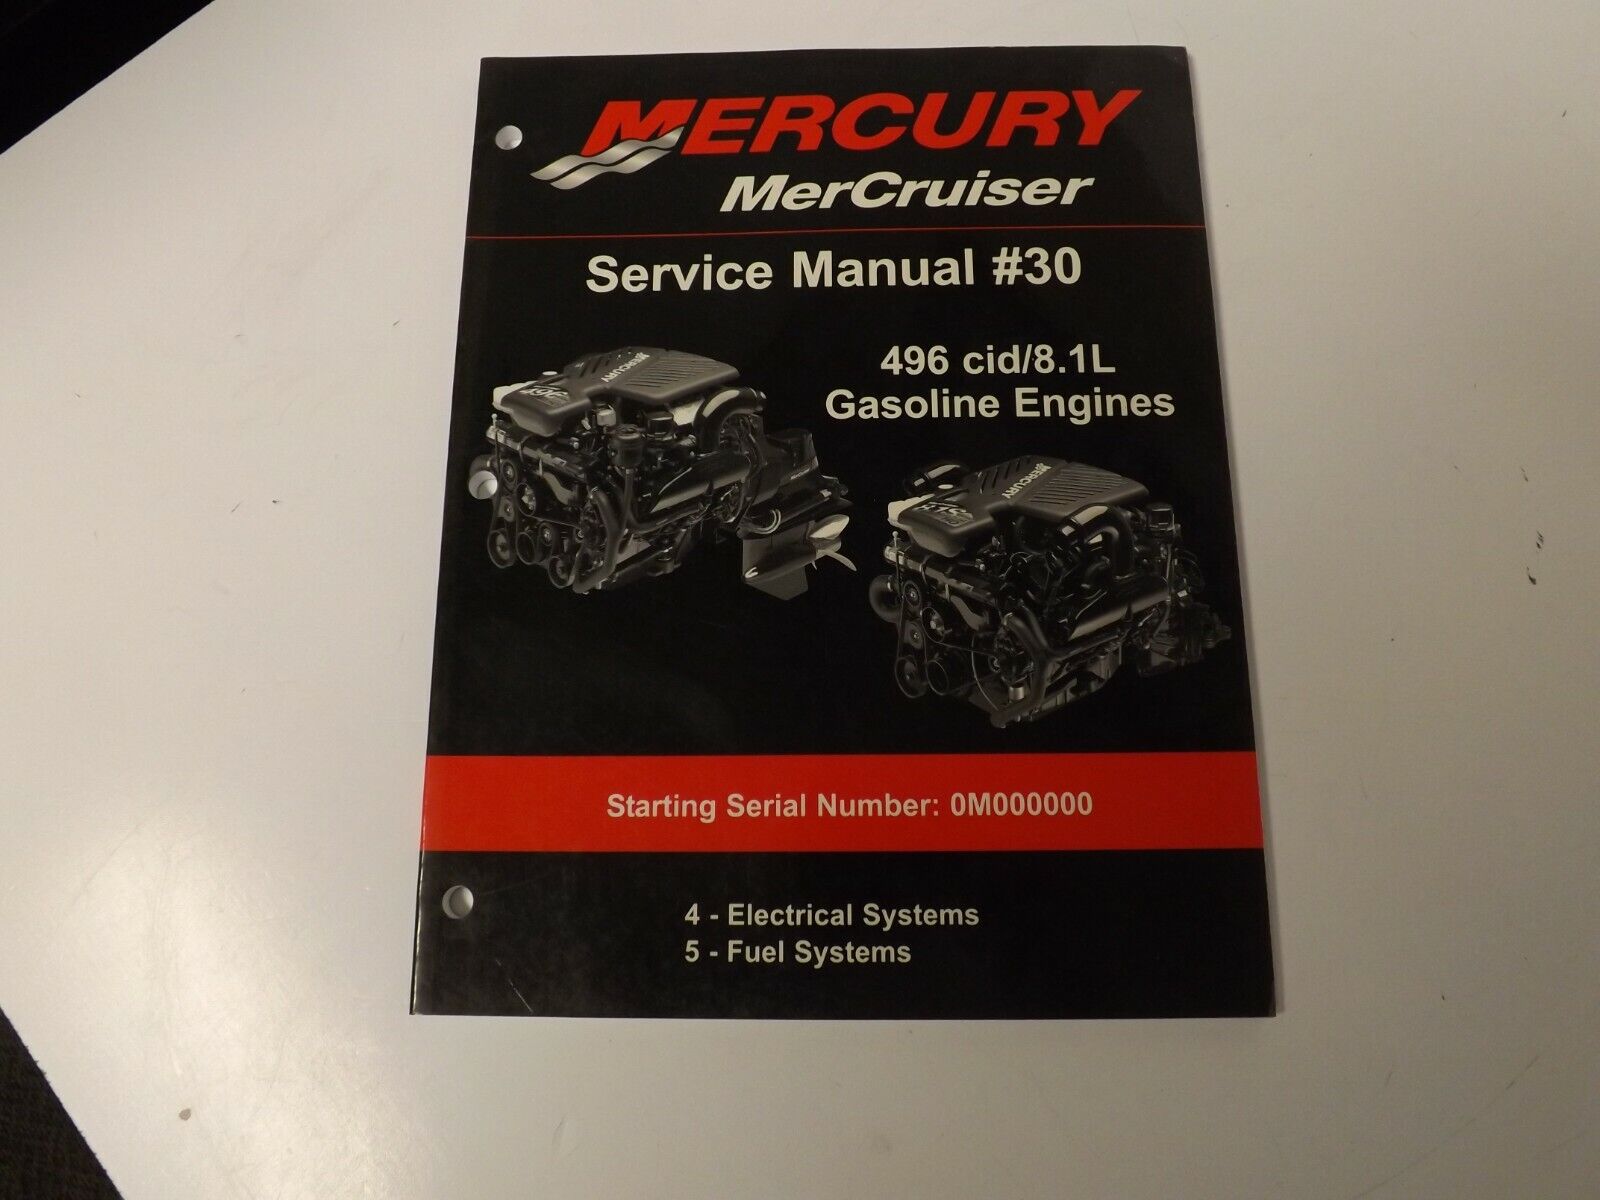 2006 Mercruiser Bravo factory manual Detroit Mall 8.1L Gasoline #30 engin Now free shipping 496